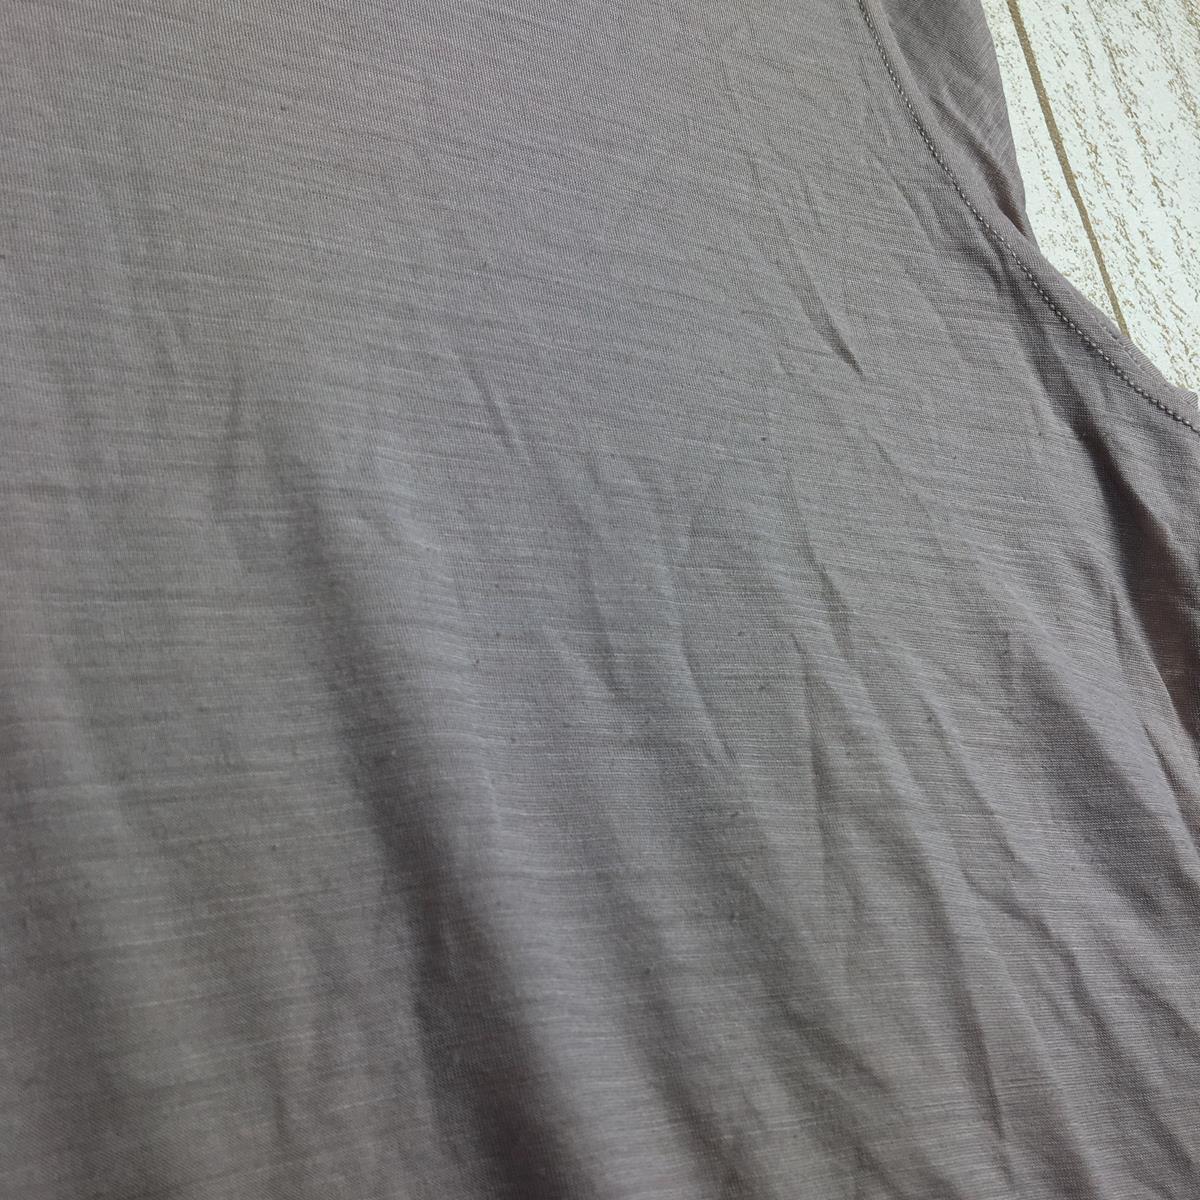 【WOMEN's S】 パタゴニア ロングスリーブ キャプリーン クール メリノ シャツ Long Sleeved Cap Cool Merino Shirt メリノウール クルーネック ベースレイヤー Tシャツ ロンT PATAGONIA 44555 STYM ピンク系